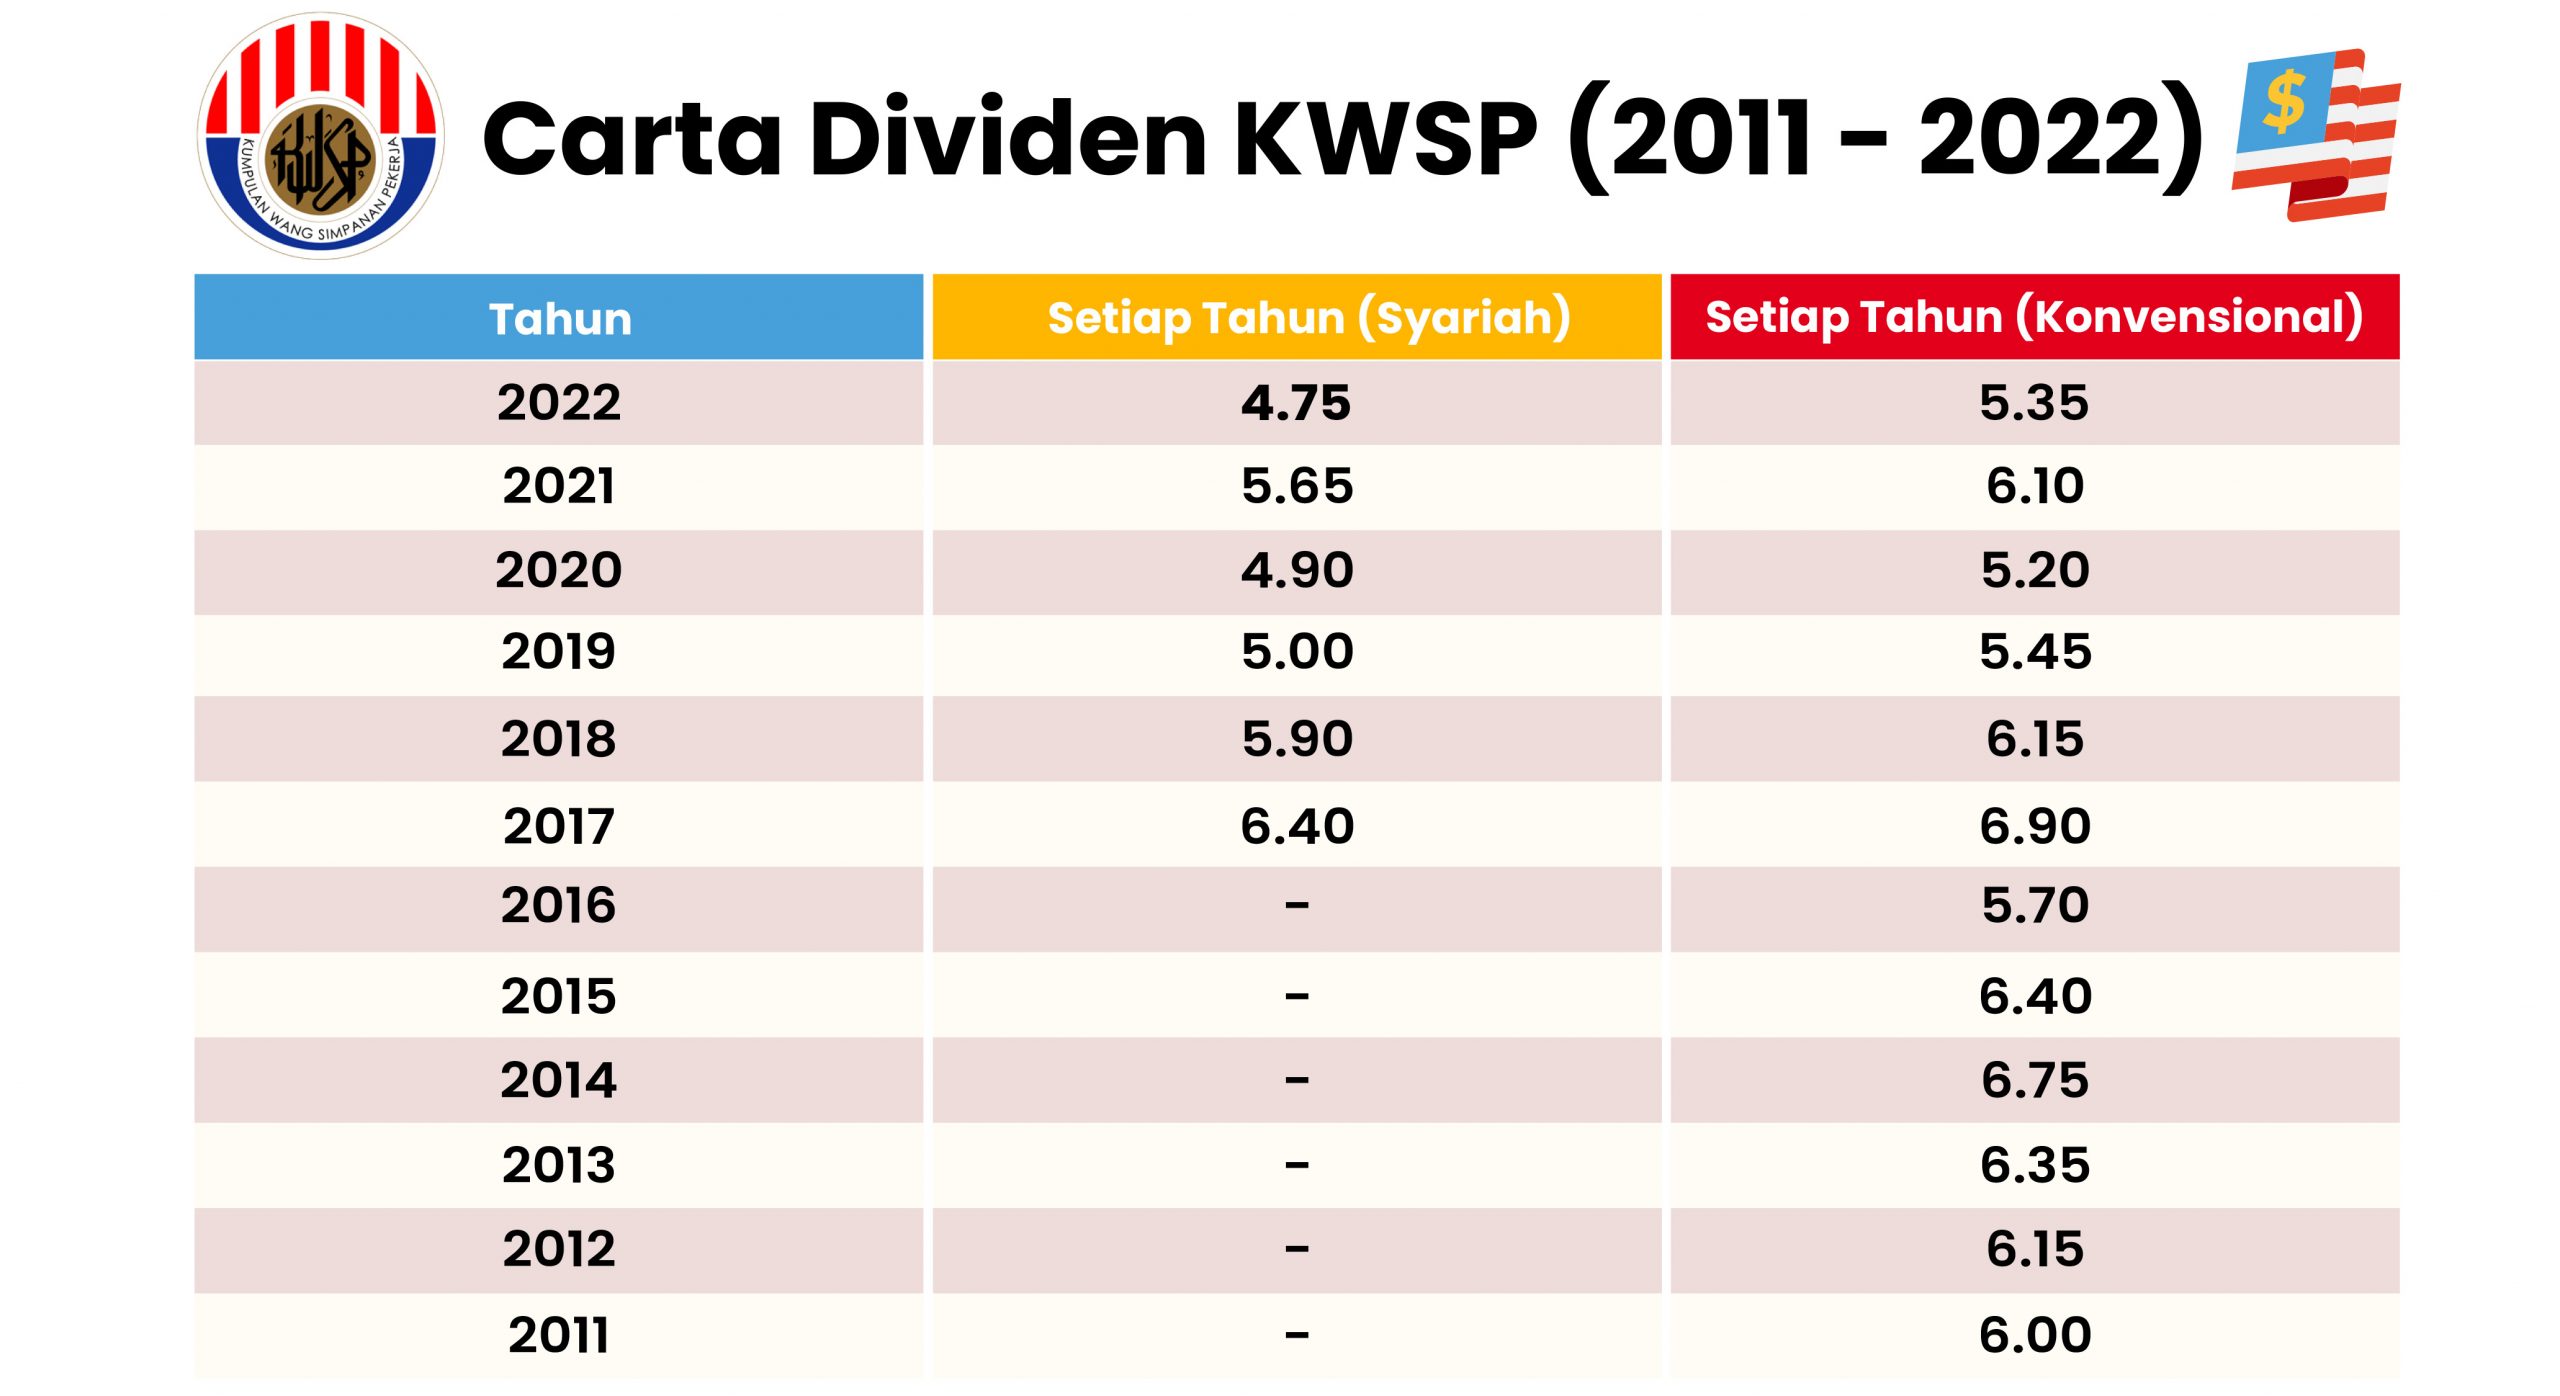 KWSP Isytihar Dividen 2022 Konvensional 5.35, Syariah 4.75 Rnggt